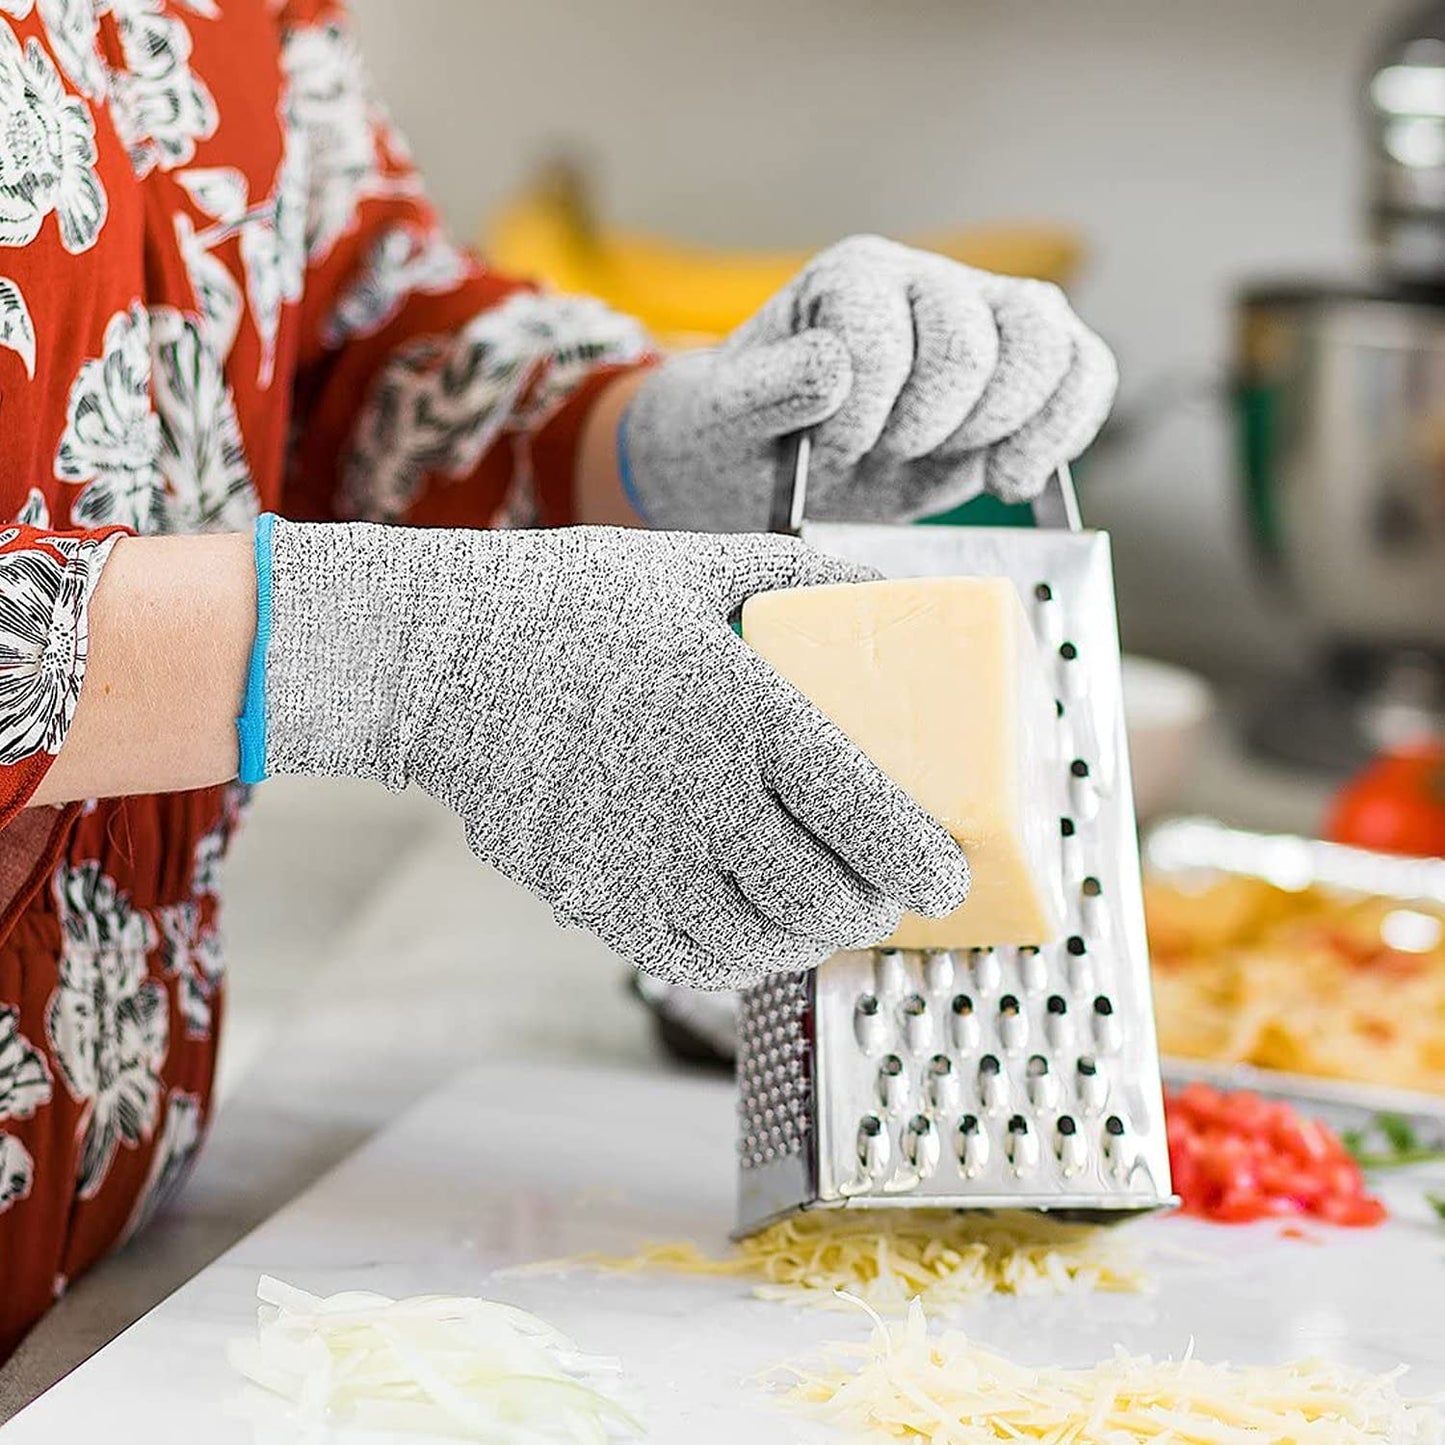 Cut Resistant Gloves for Kitchen 